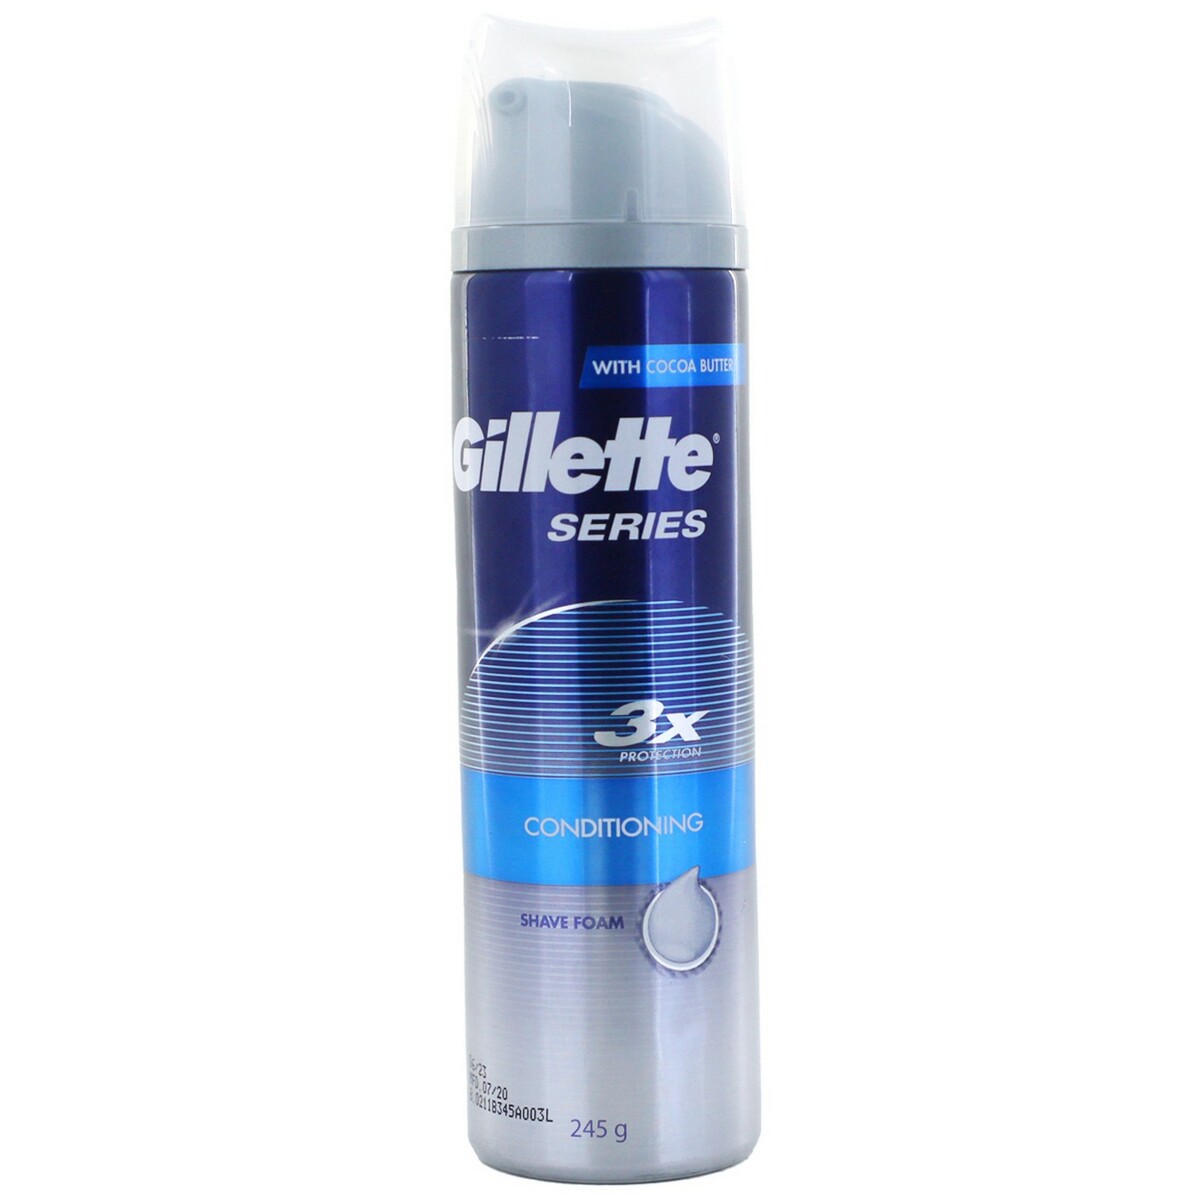 Gillette Shaving Foam Series Conditioning 245g